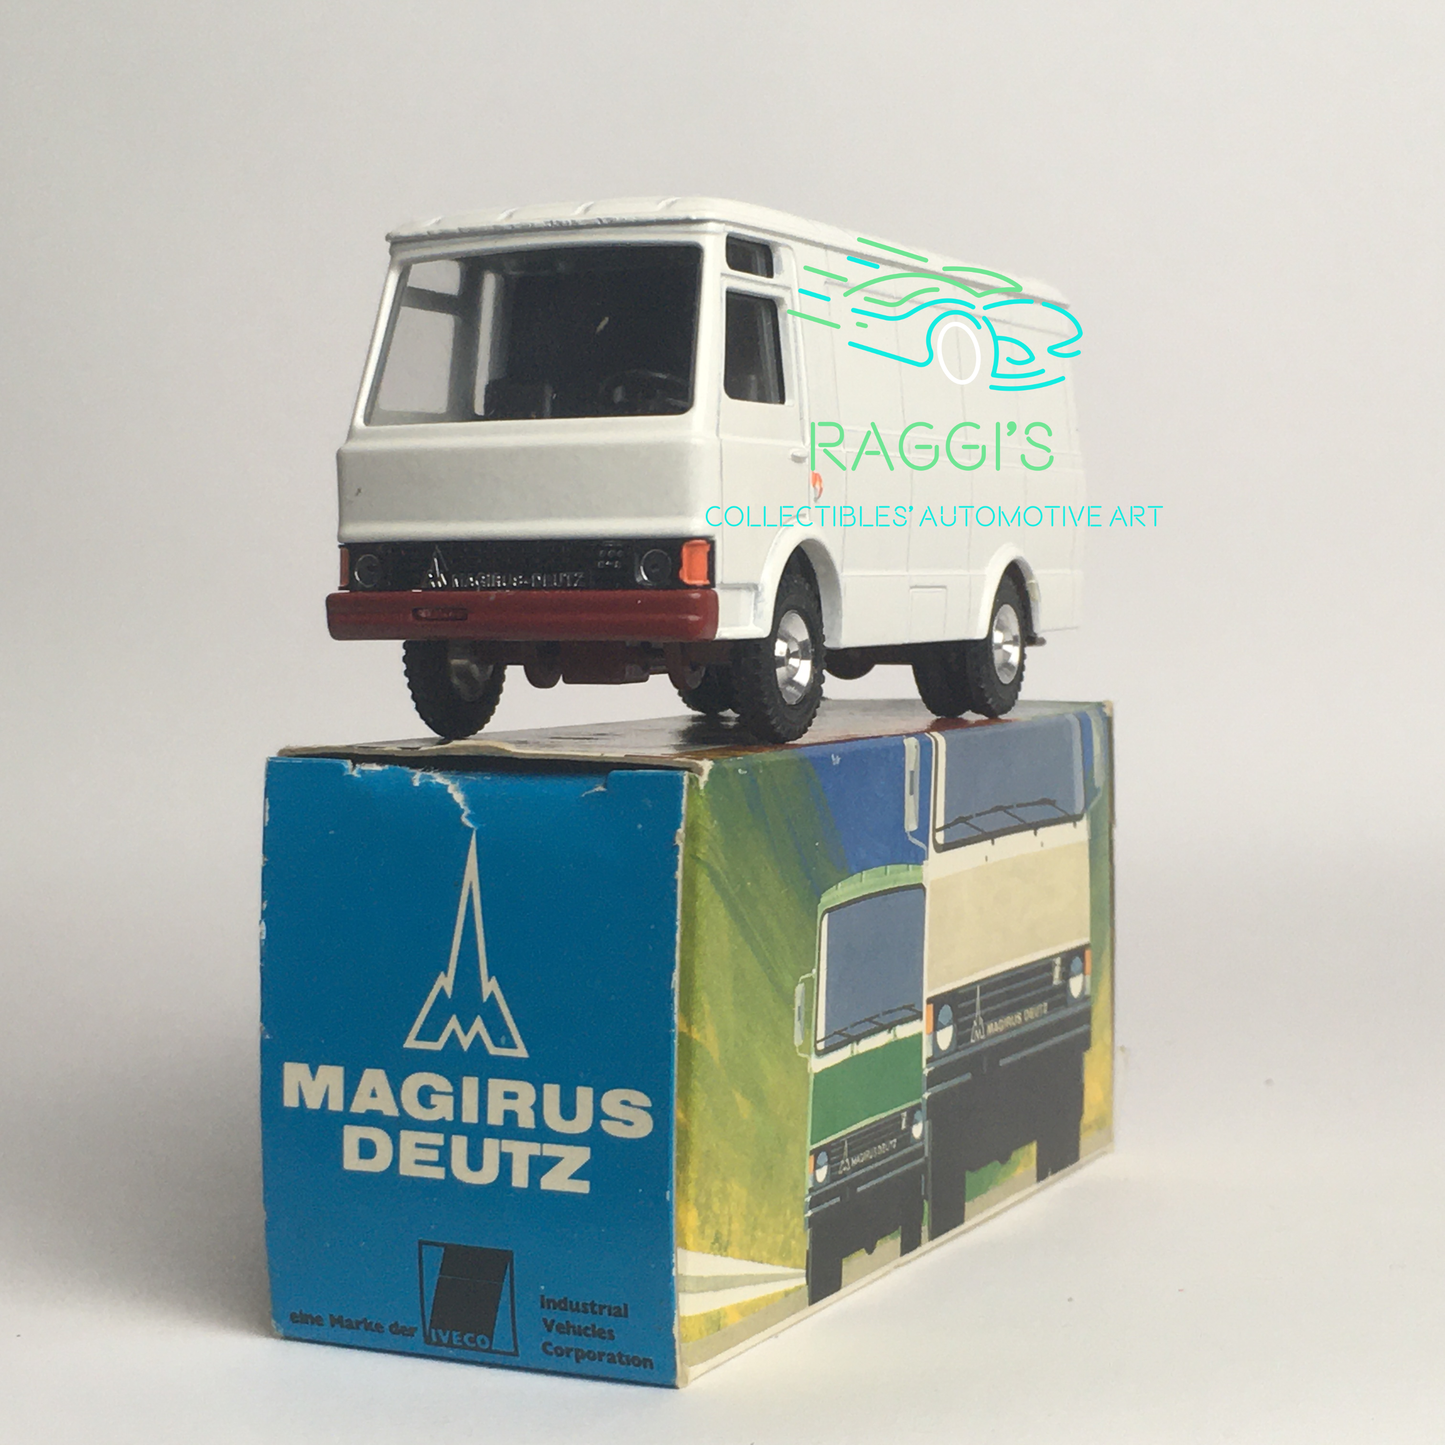 Magirus-Deutz, Modellino in Scala 1:43 in Metallo Pressofuso Magirus-Deutz OM 90D, Mint Condition e Scatola Originale - Raggi's Collectibles' Automotive Art